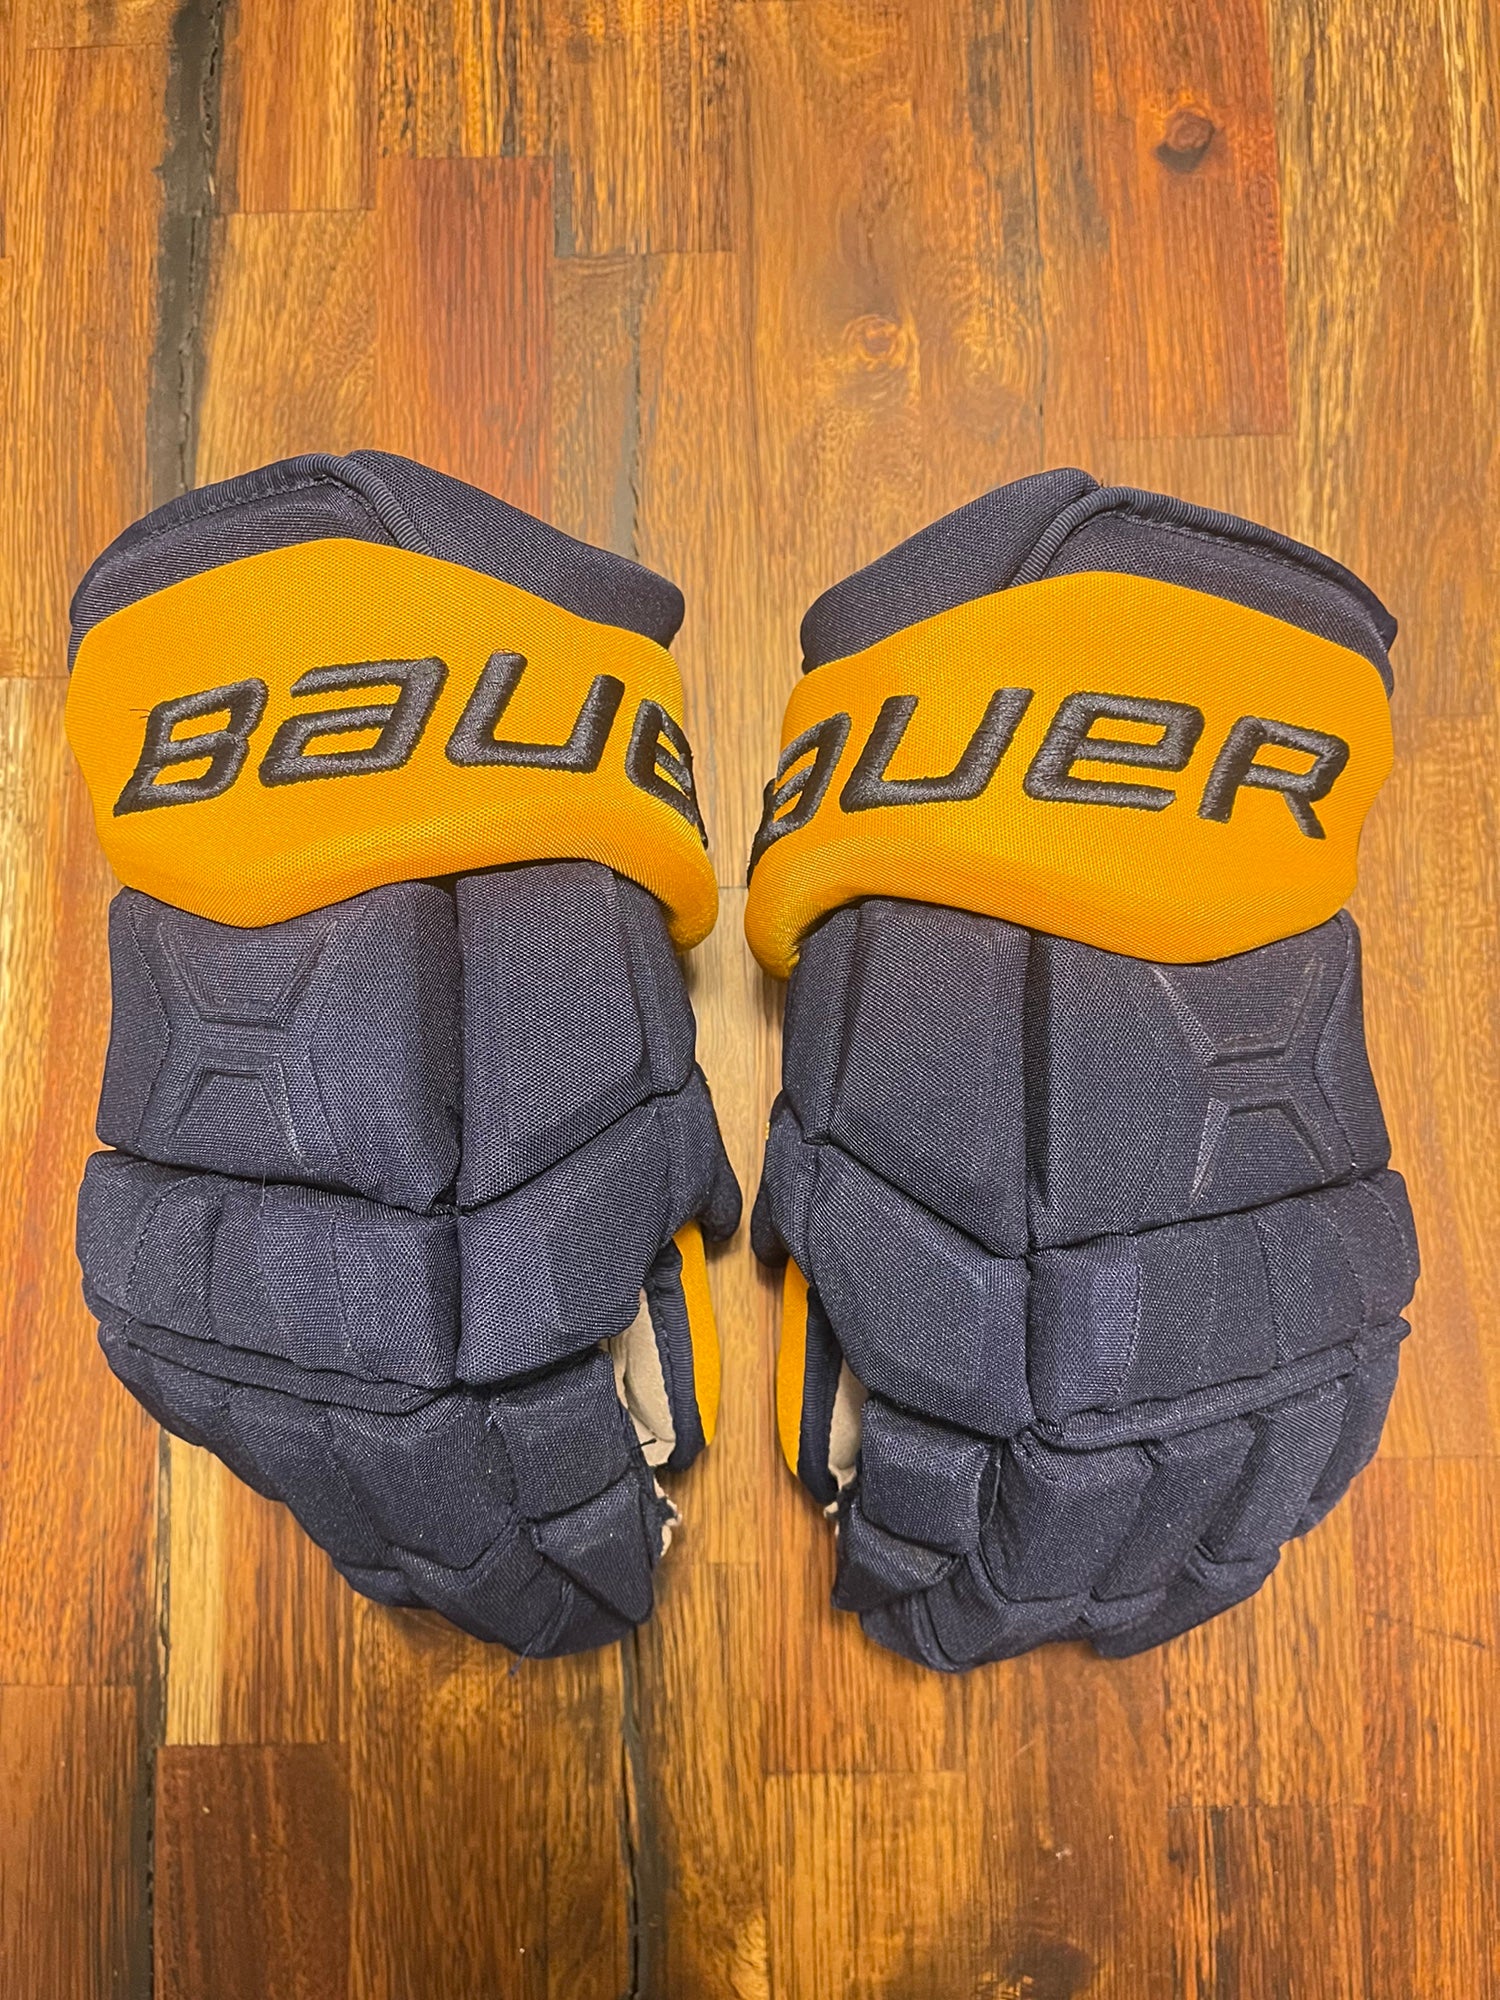 Bauer Supreme MX3 New Jersey Devils NHL Pro Stock Ice Hockey Player Gloves  14